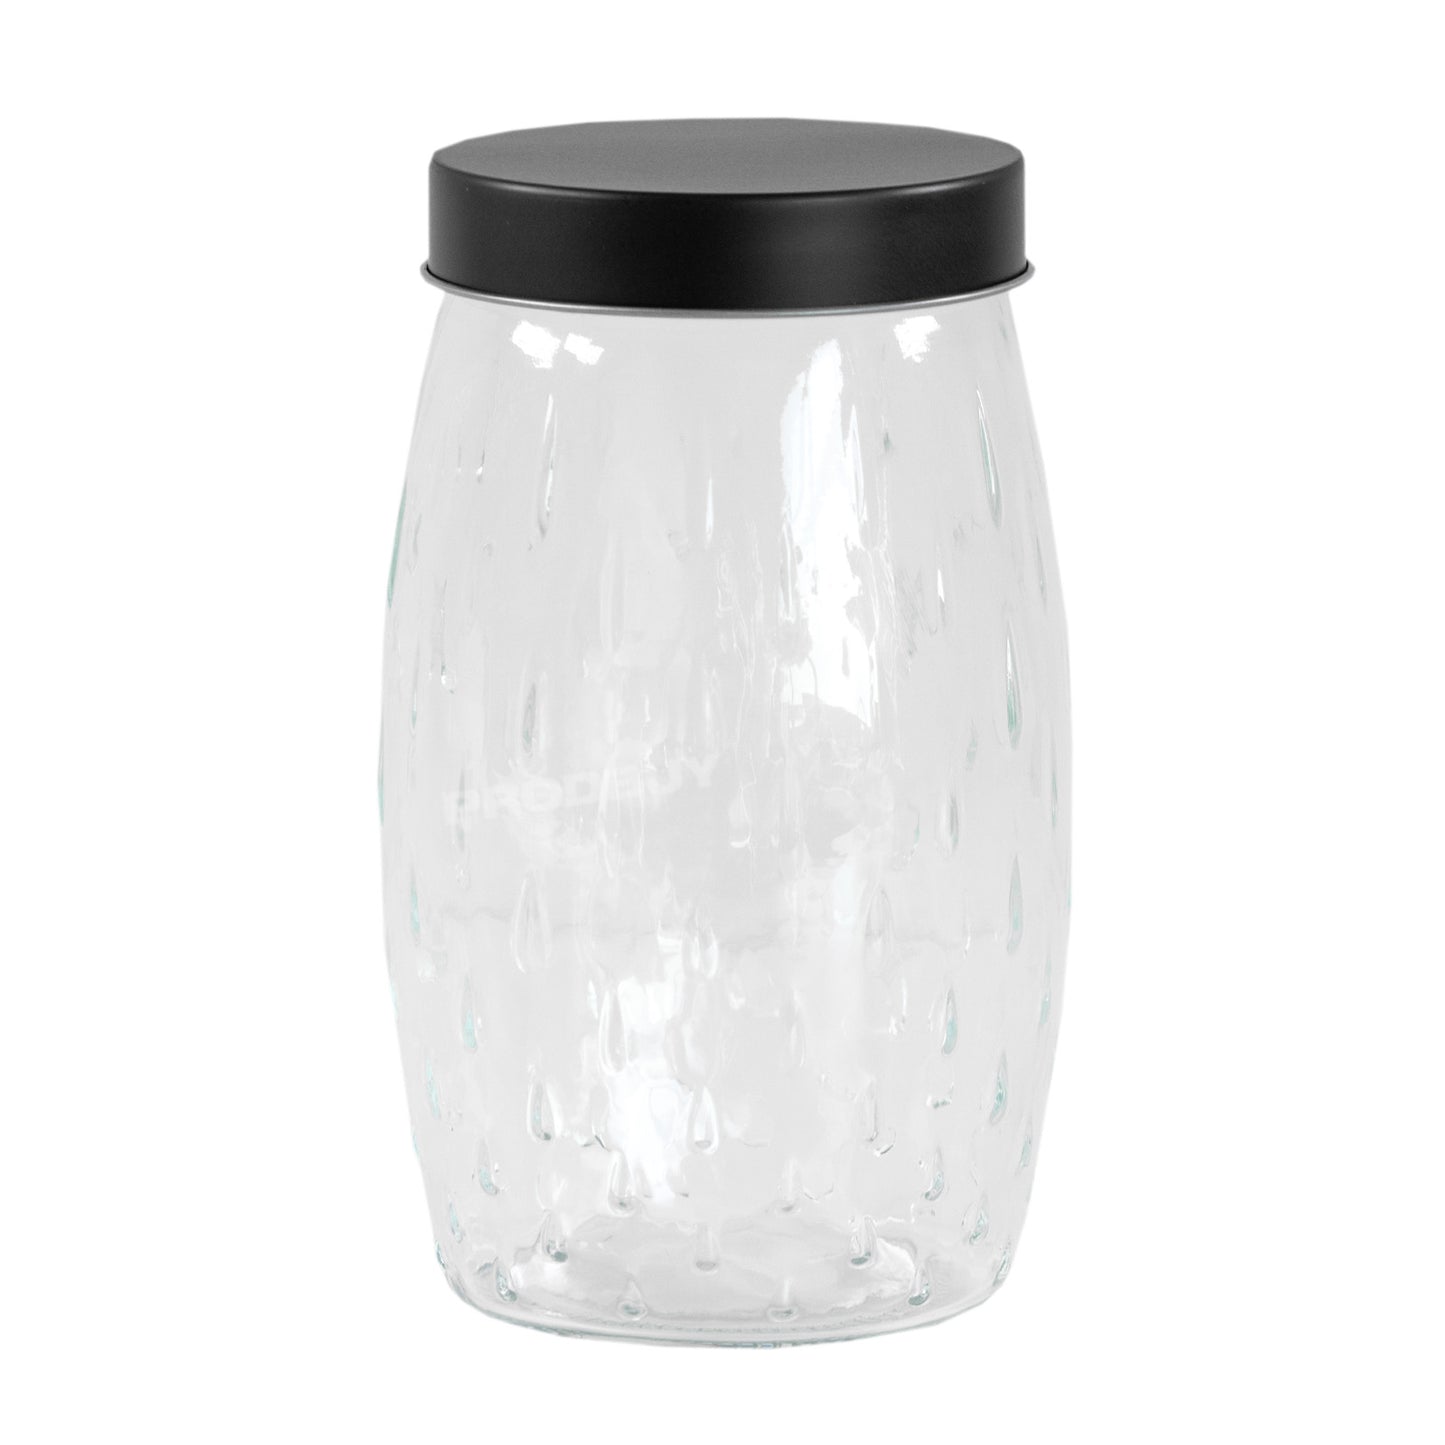 2 Litre Large Glass Storage Jar wiht a Black Screw on Lid